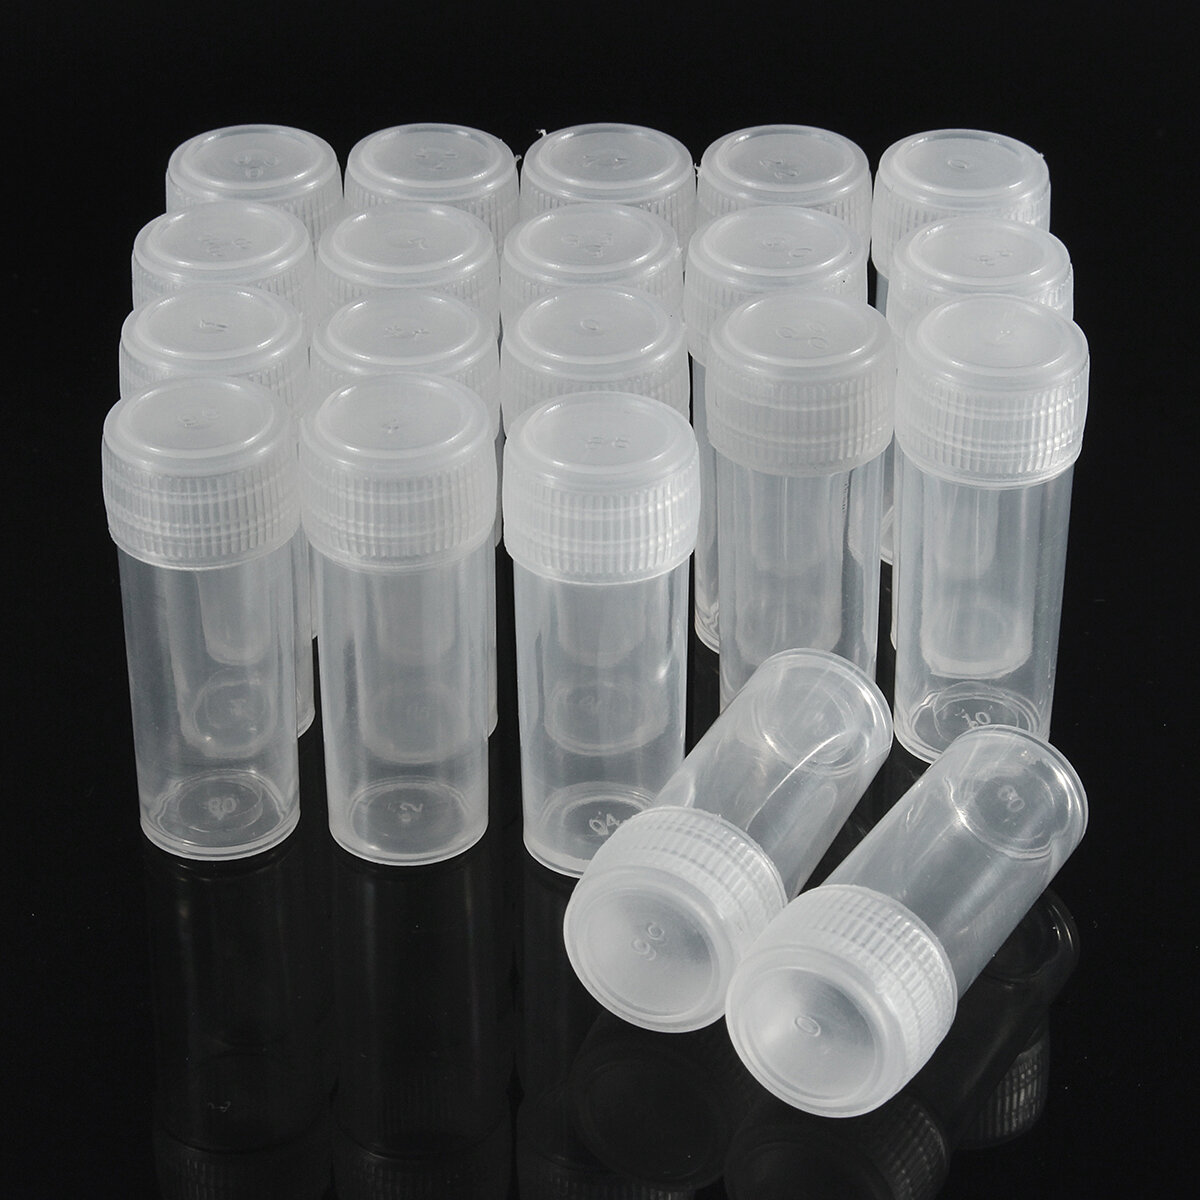 20 Stks 5 ml Chemie Plastic Reageerbuis Flesjes met Seal Caps Pack Container